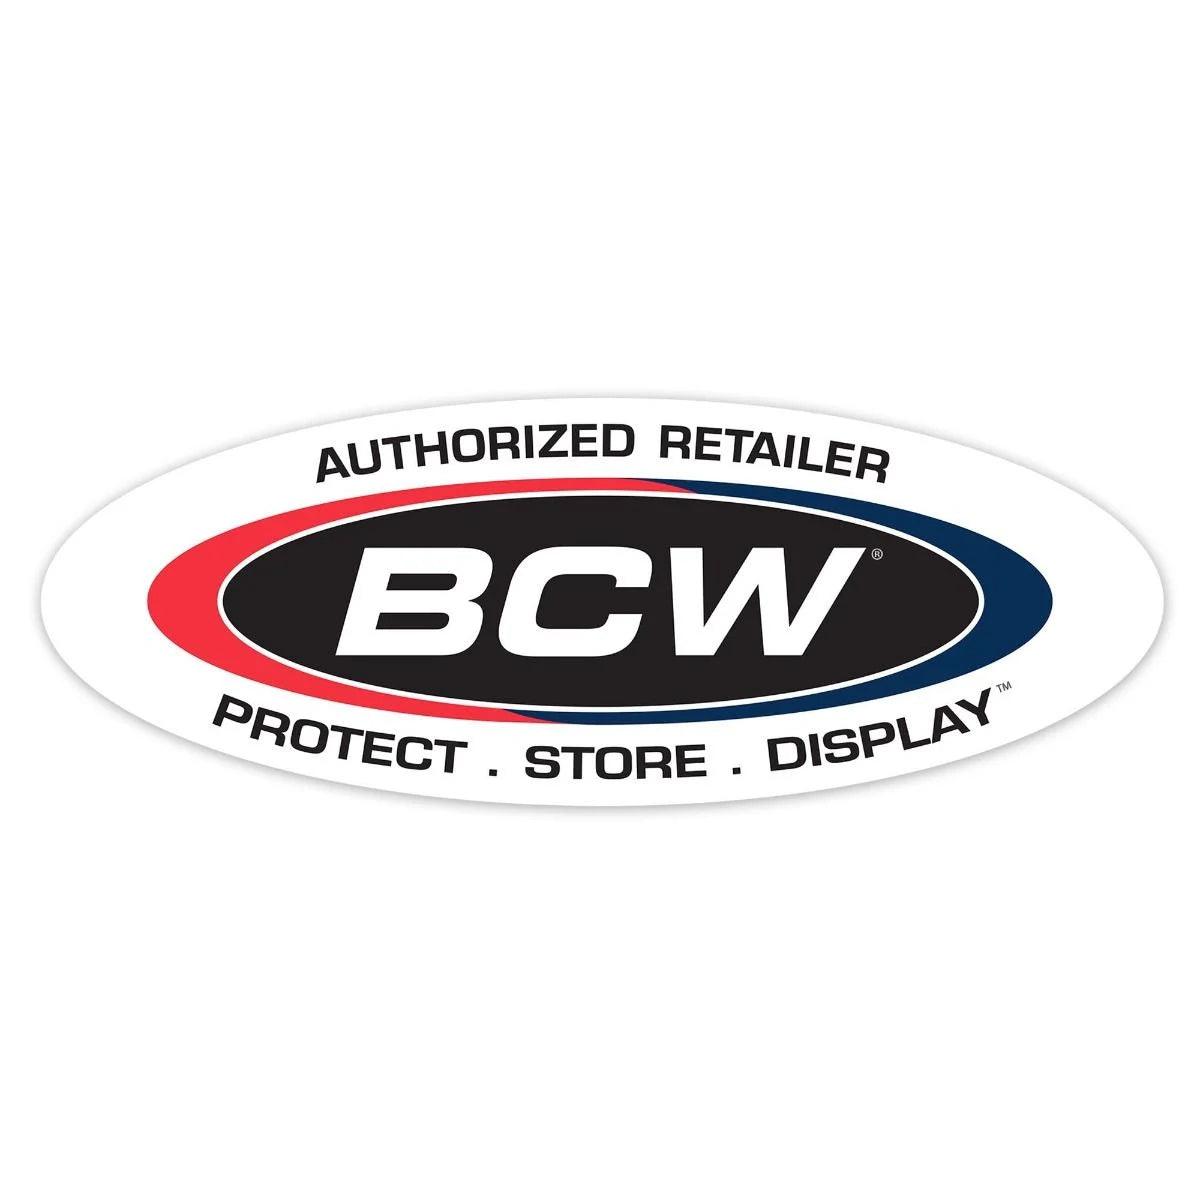 BCW - Album/Binder/Portfolio - 3'' Premium Brown - Basketball - Hobby Champion Inc